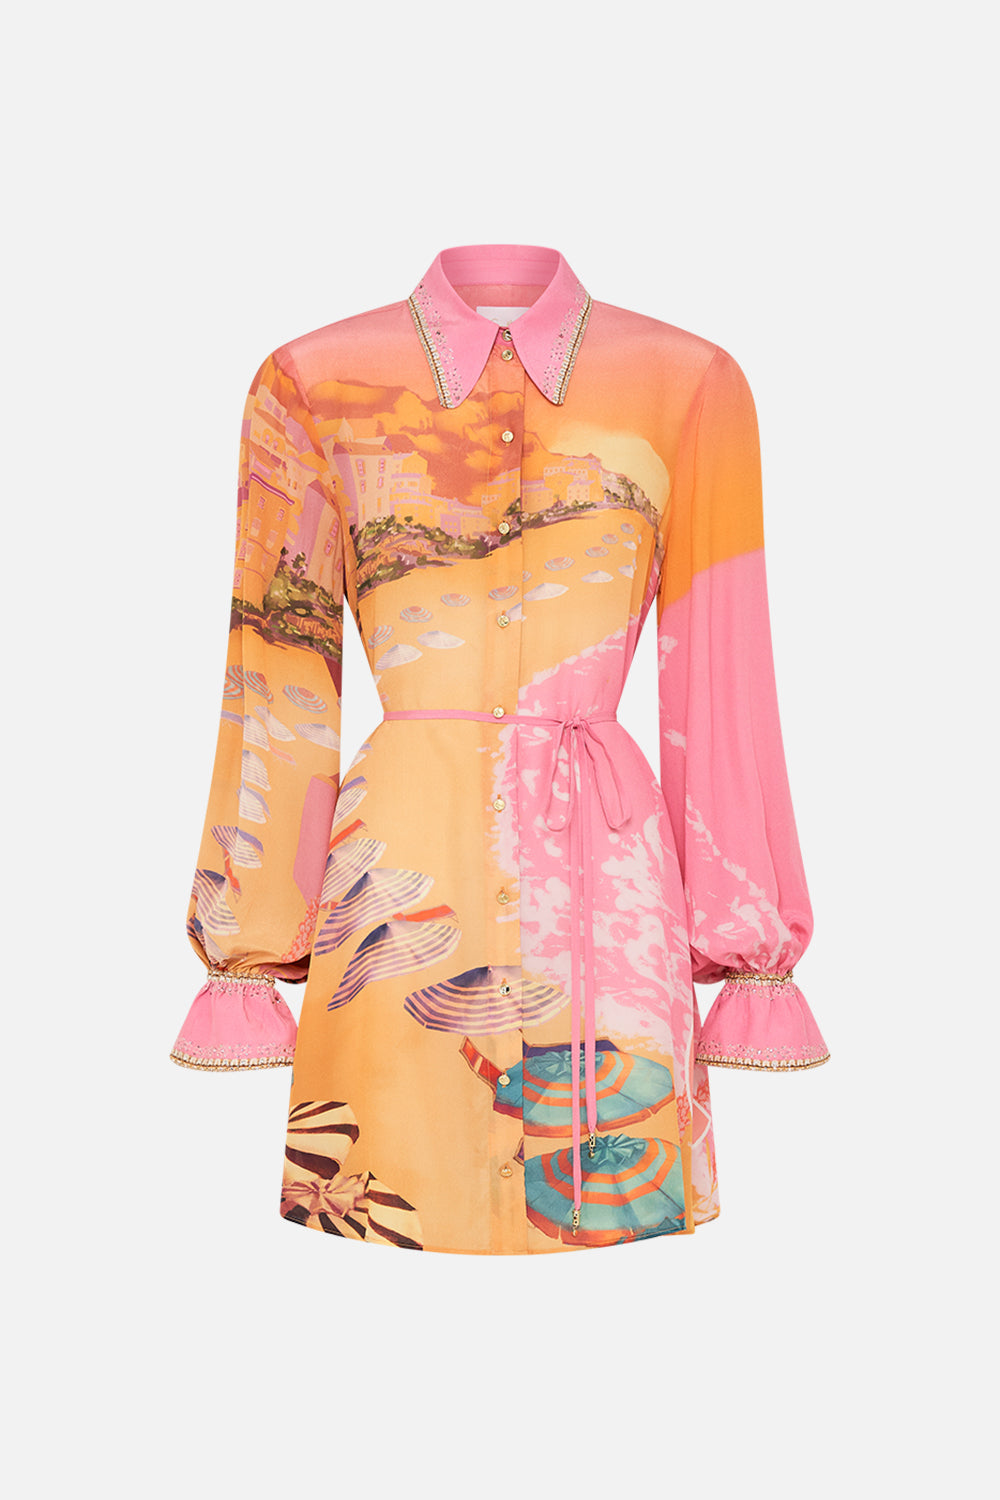 Product view of CAMILLA silk shirt dress in Capri Me print